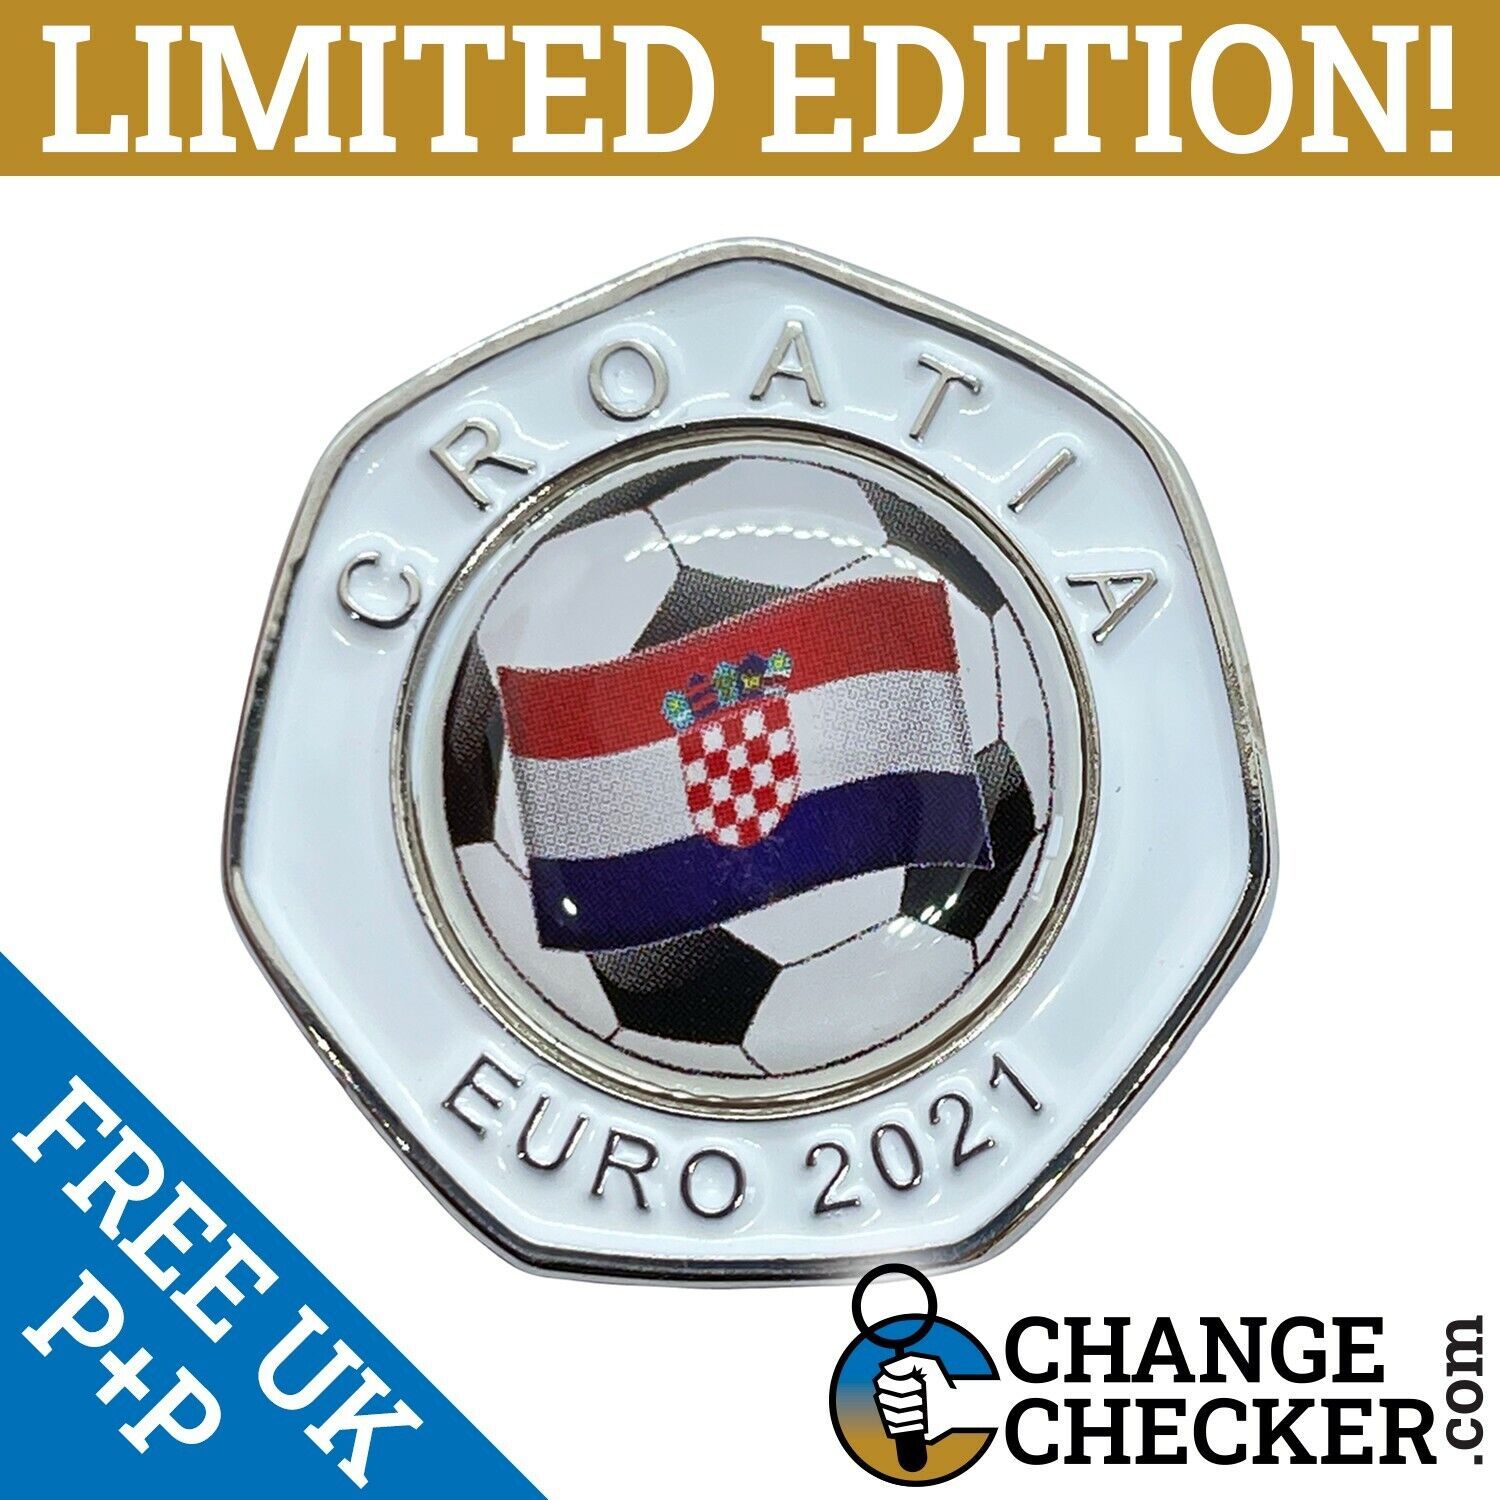 Croatia EURO 2021 Football 50p Shaped Coins